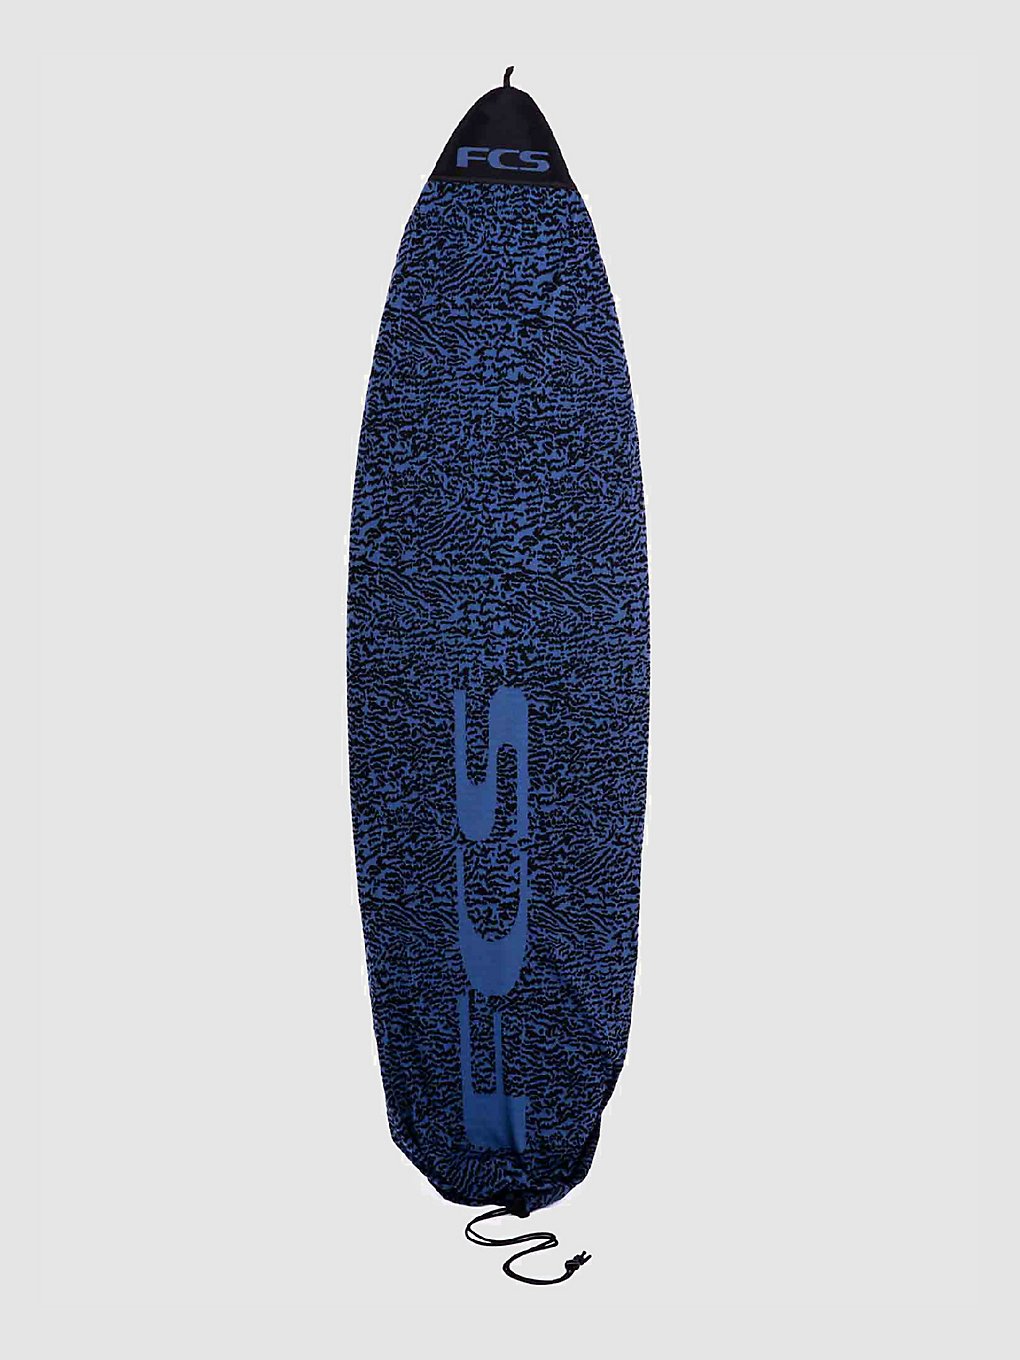 FCS Stretch Fun Board 6'7" Surfboard-Tasche stone blue kaufen